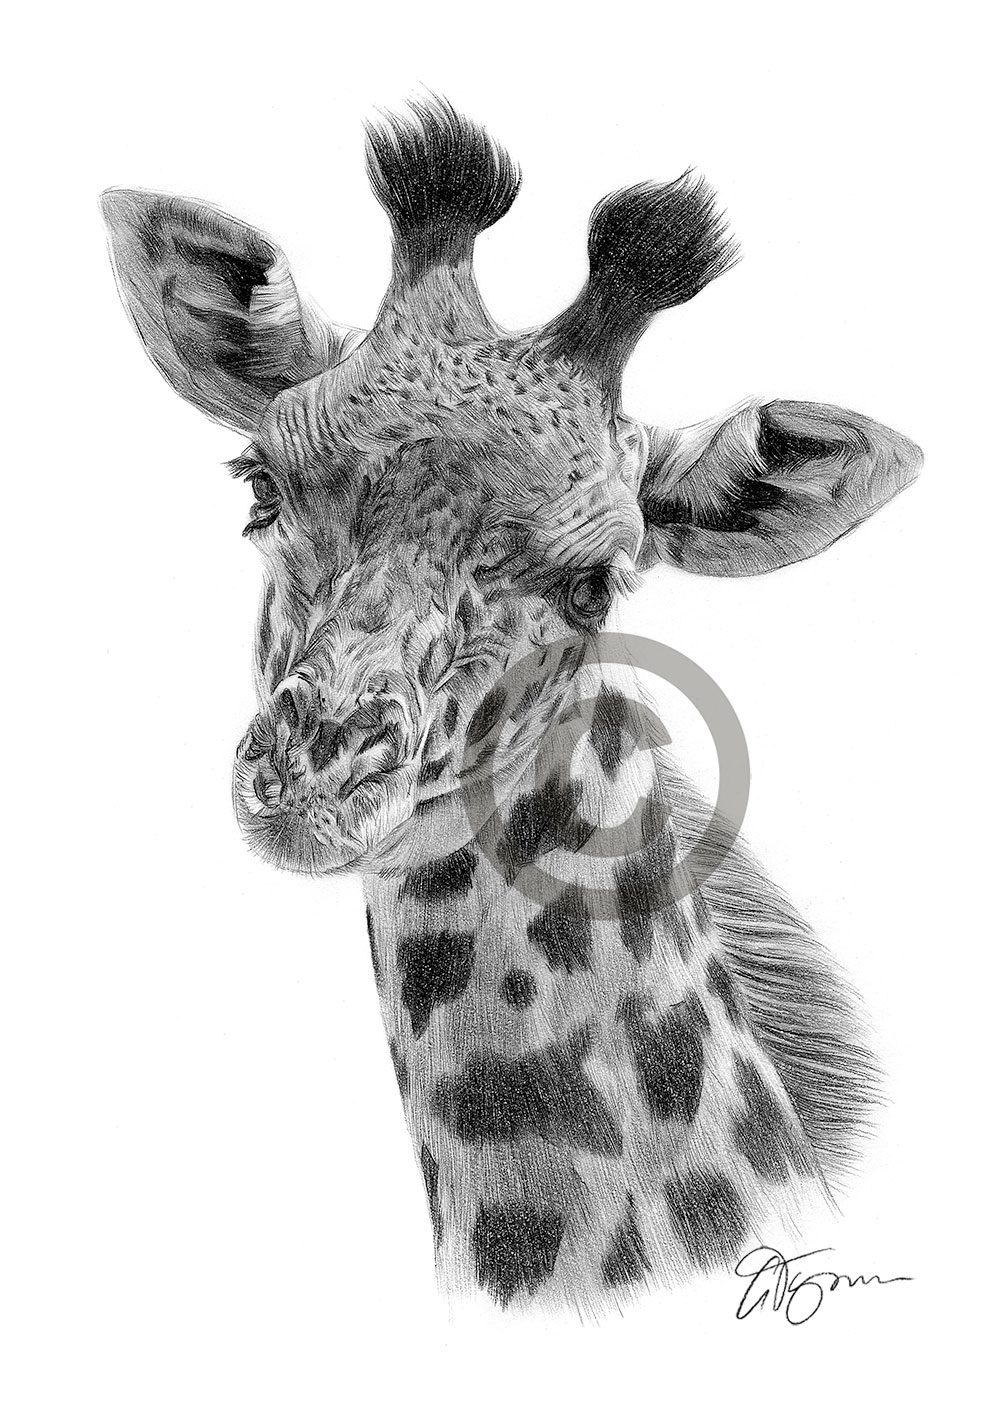 Pencil drawing of a giraffe by artist Gary Tymon